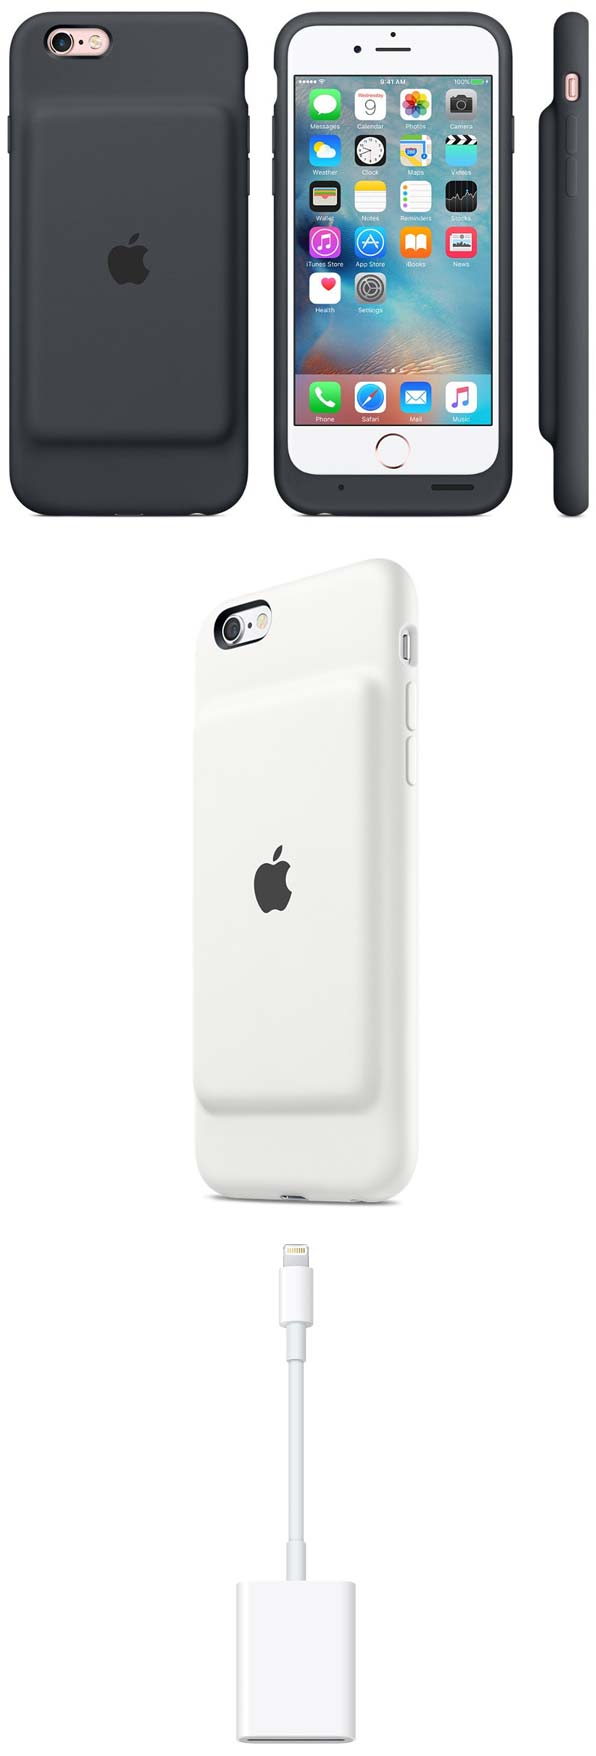 На фото Apple iPhone 6s Smart Battery Case и Lightning to SD Card Camera Reader